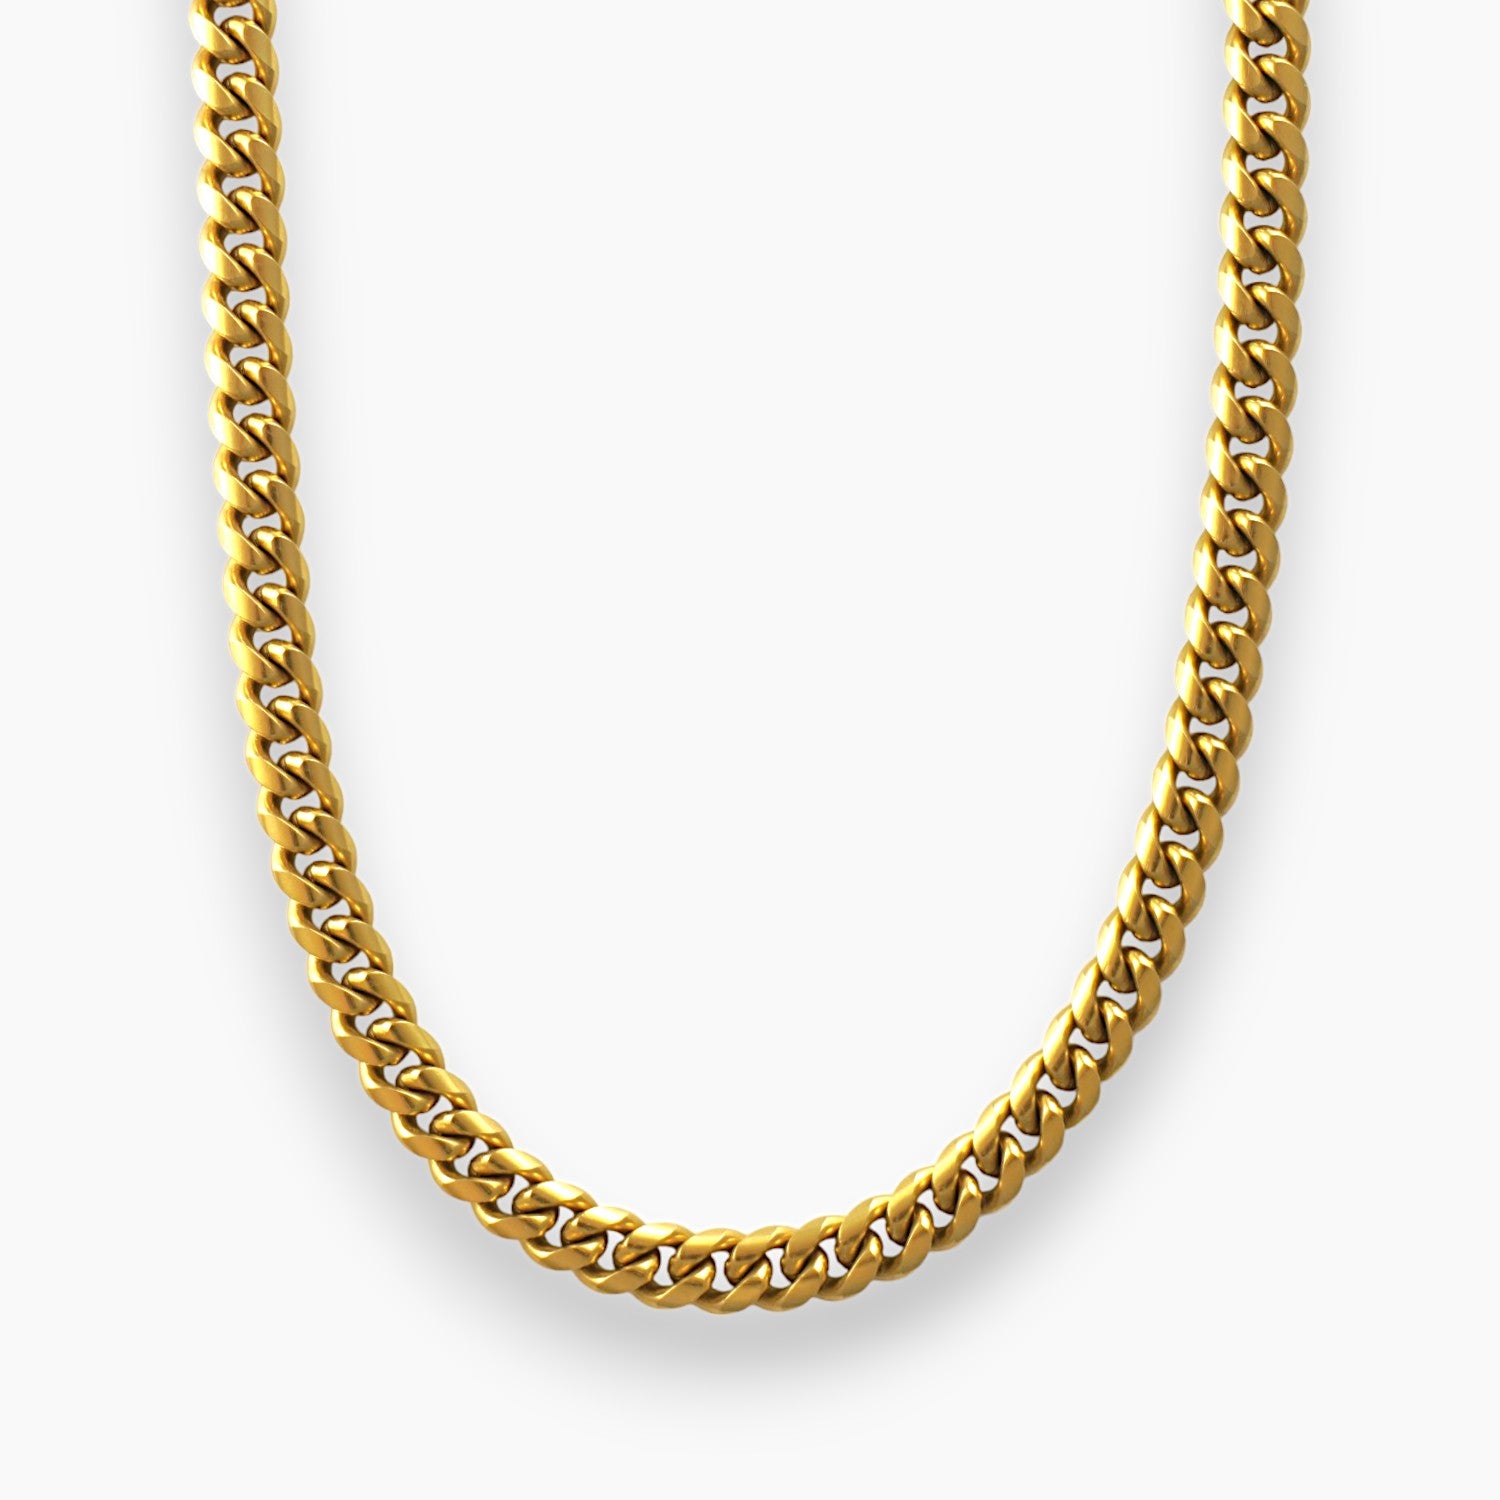 8mm gold cuban chain